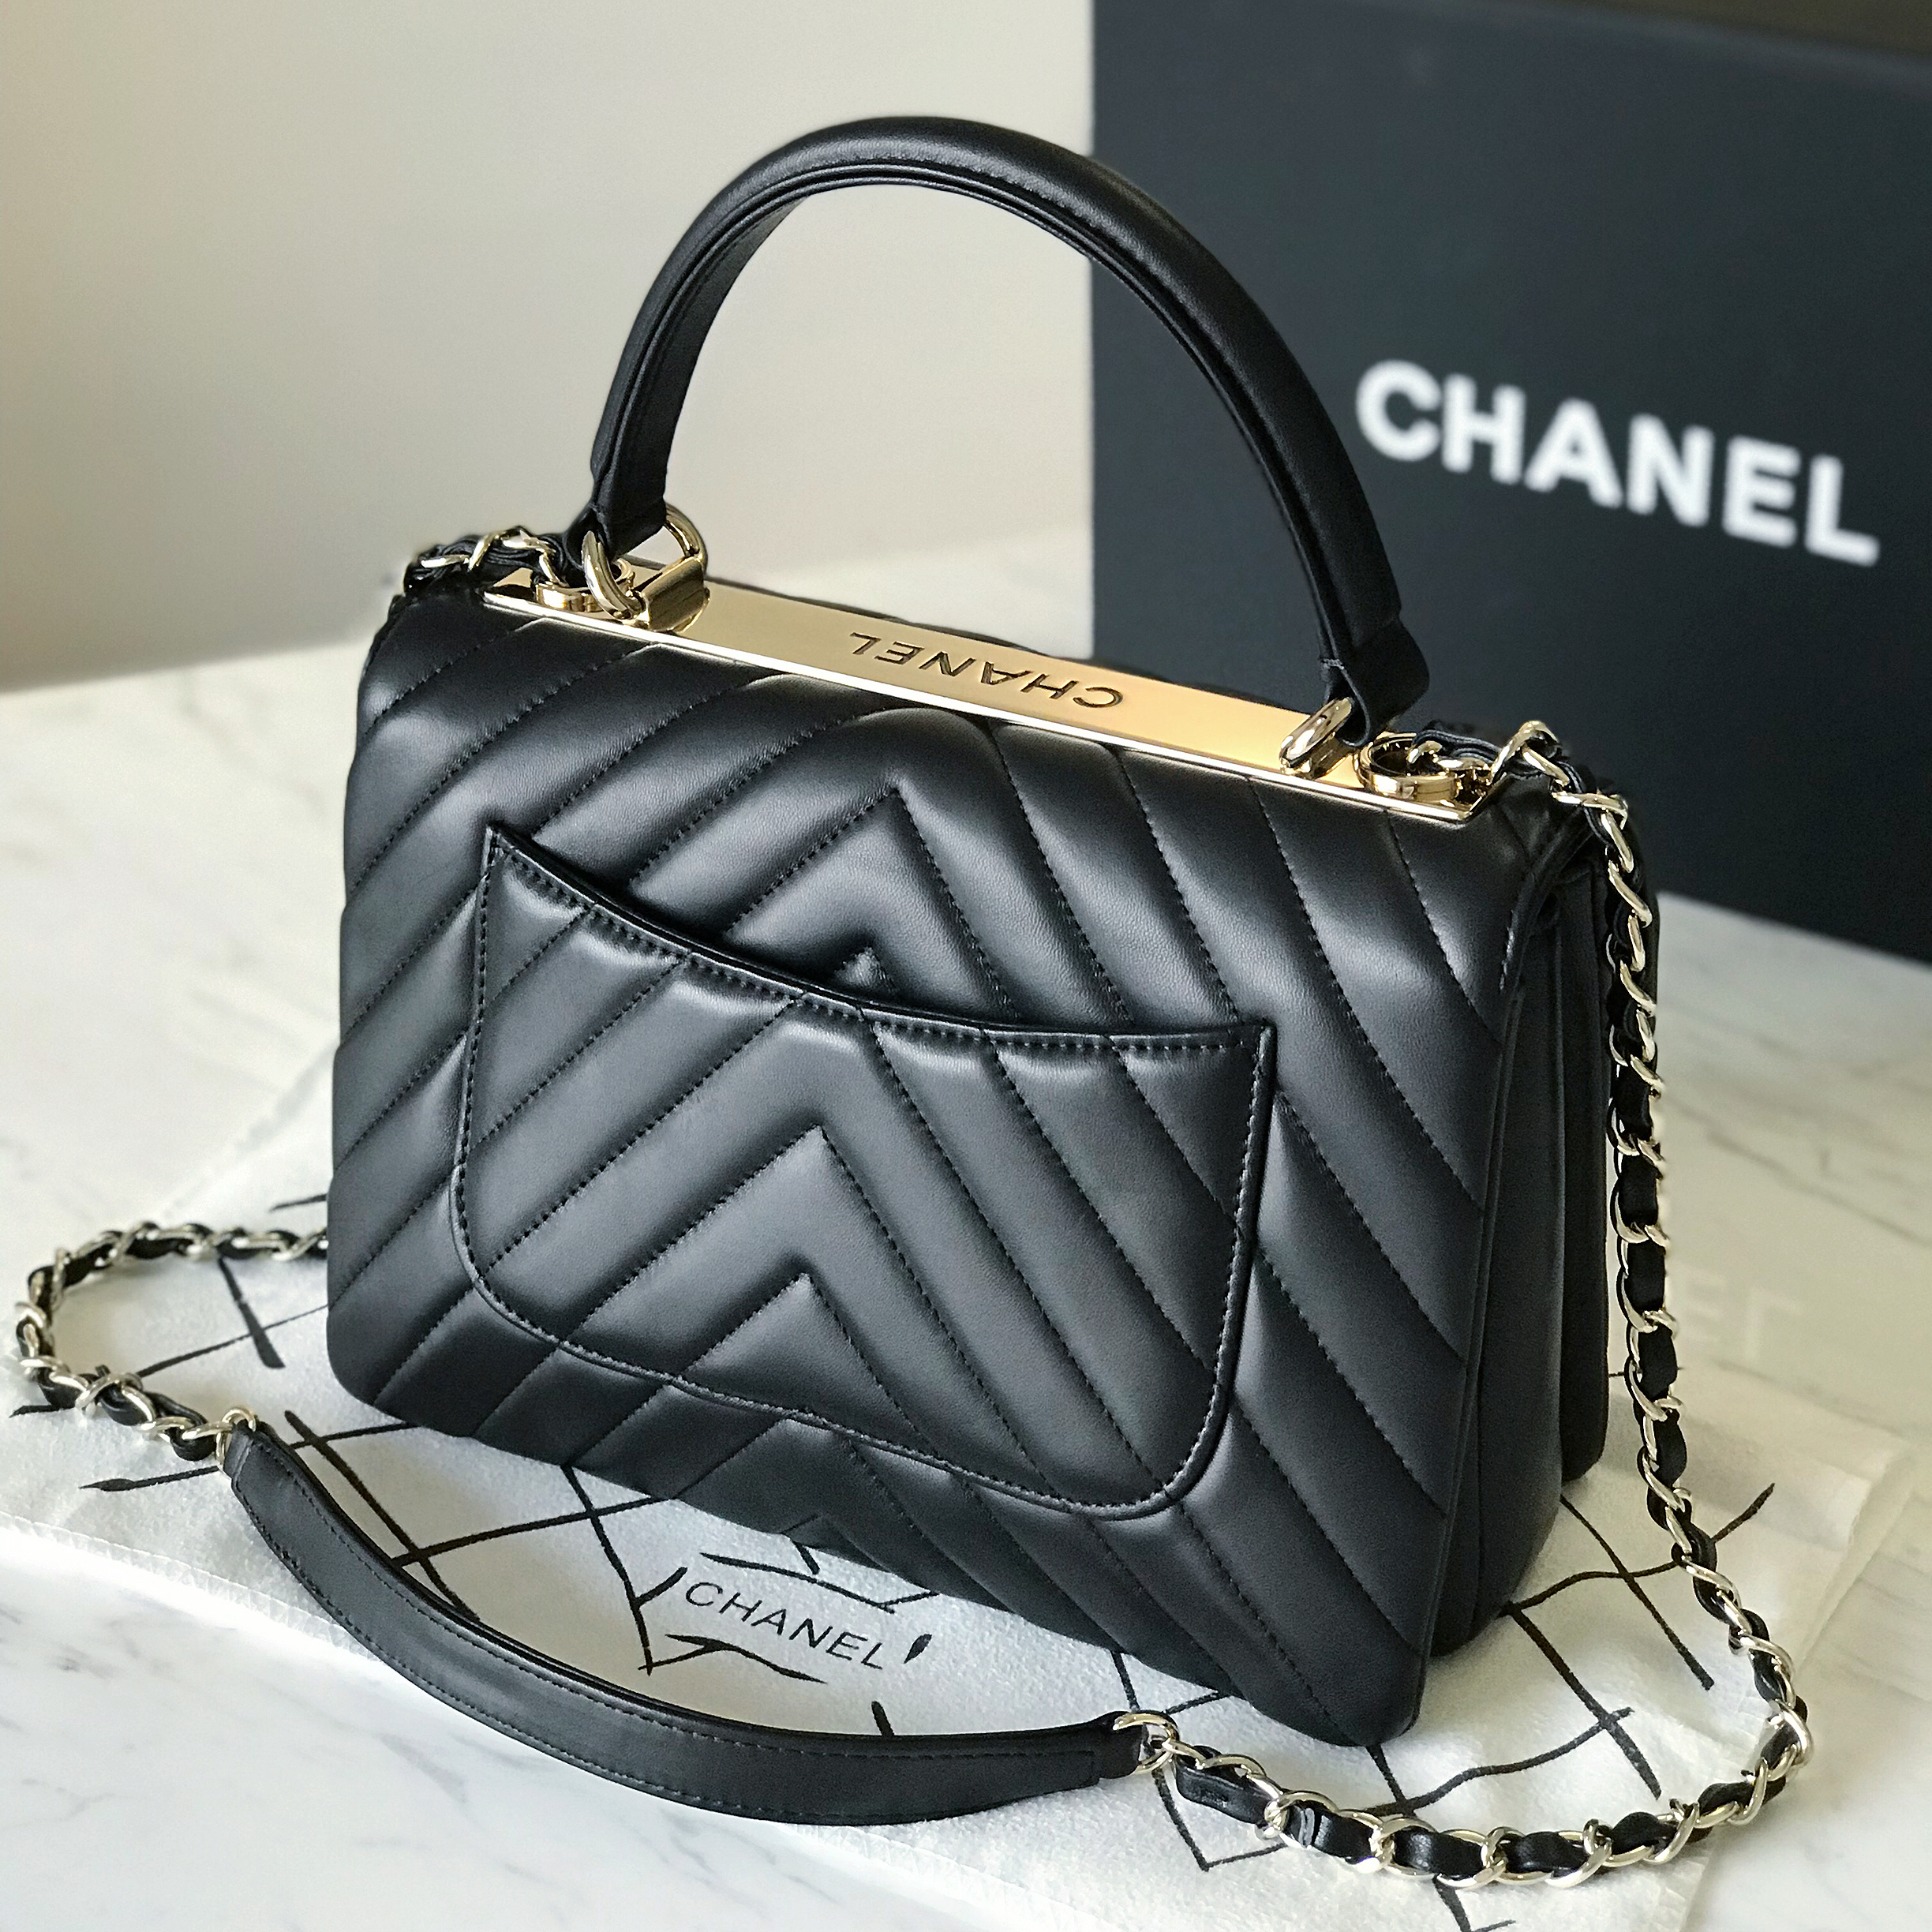 Coco Chanel Handbags Australia | semashow.com